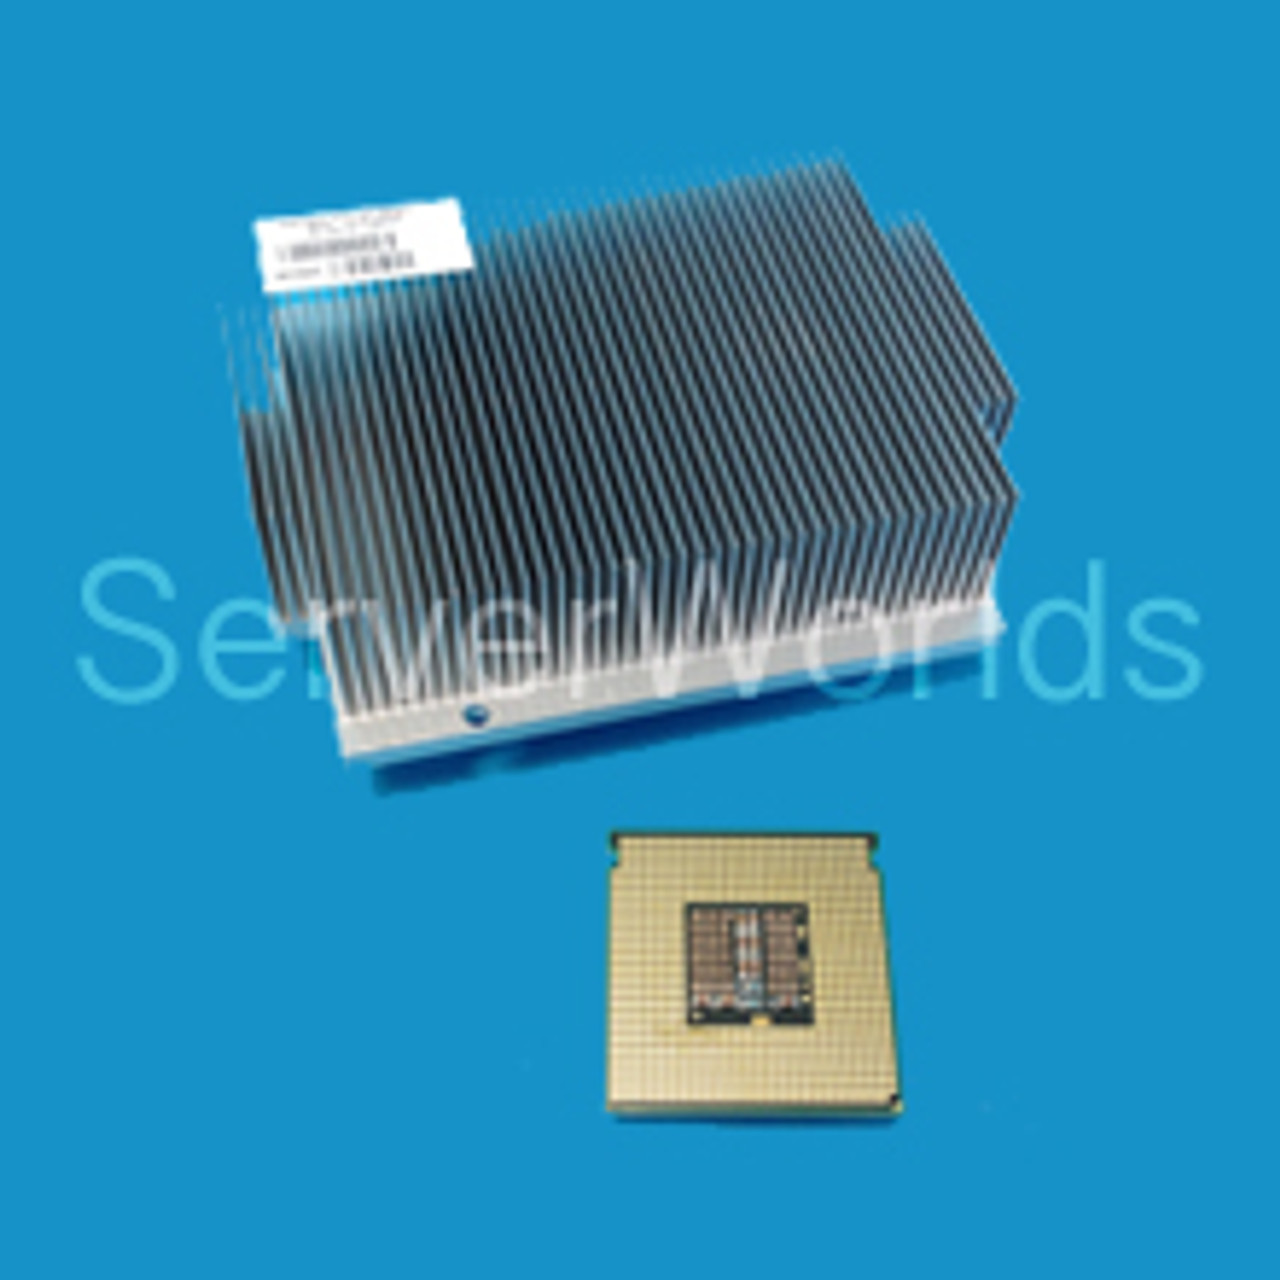 HP DL360 G5 Quad Core E5405 2.00GHz Processor Kit 457941-B21